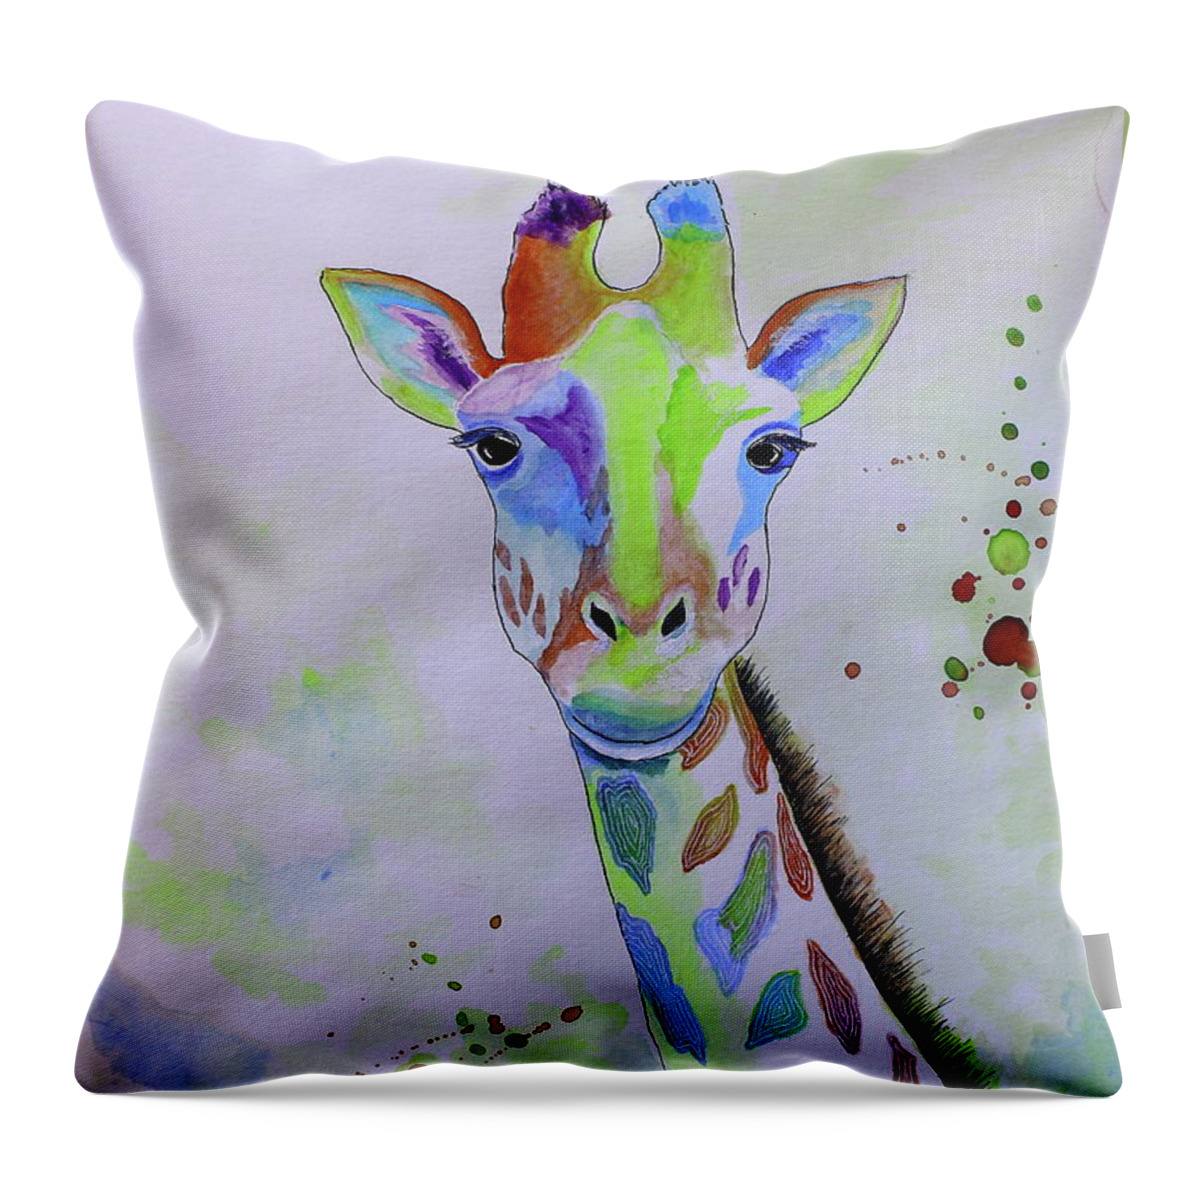 Giraffe Throw Pillow featuring the painting Giraffe by Barbara Teller